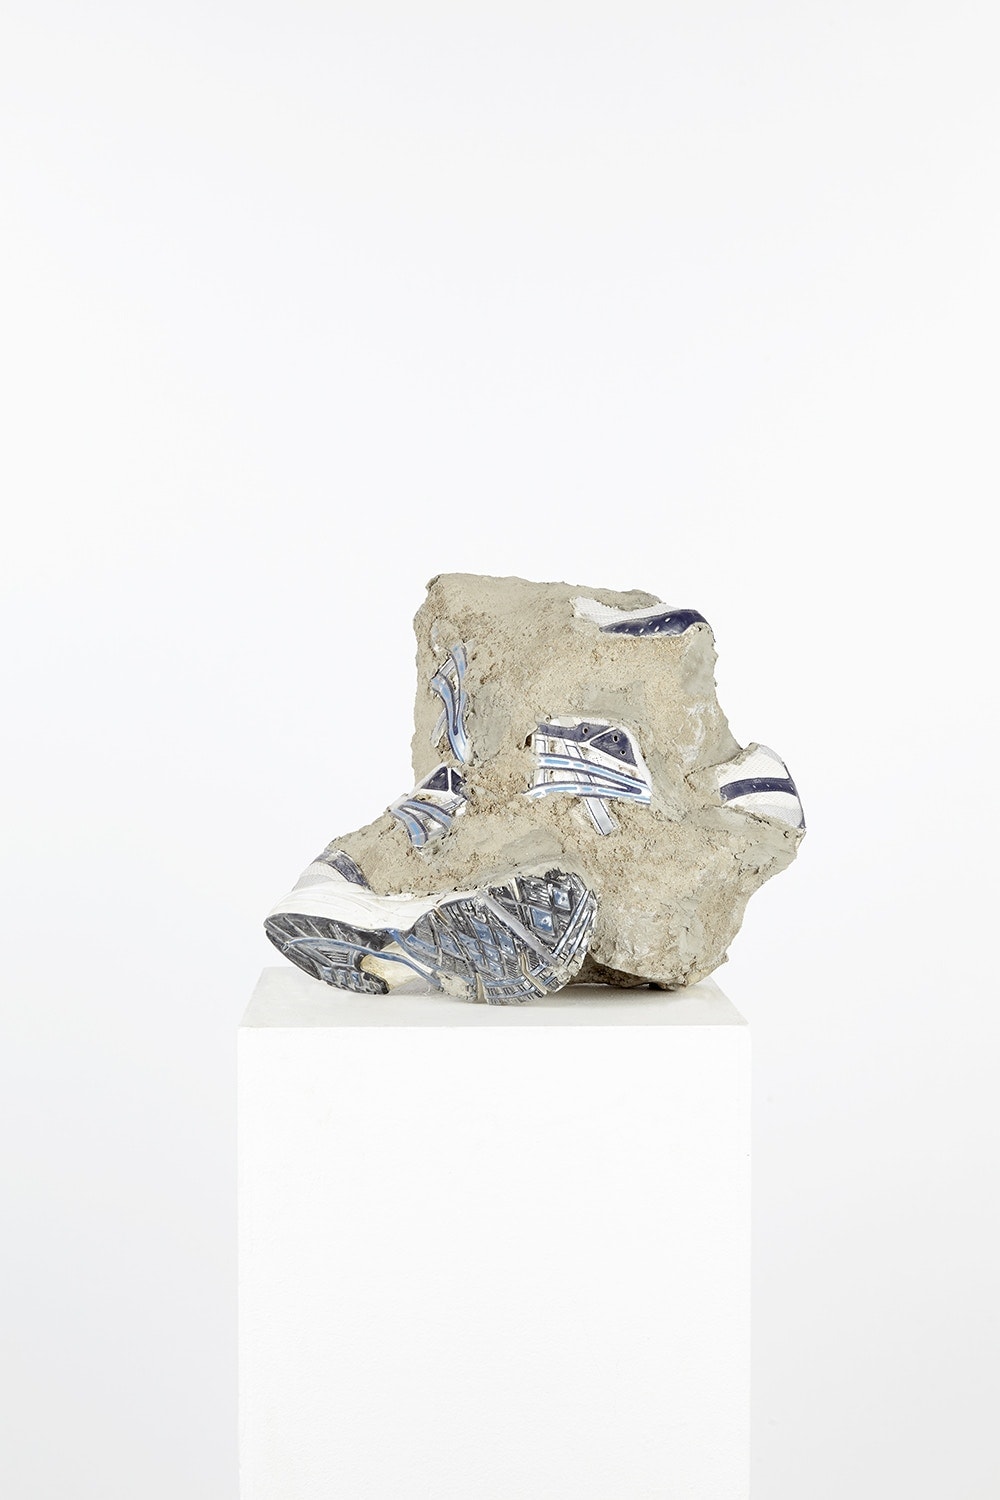 Central Saint Martins 學生 Mathilde Schöbiz 創作「球鞋化石」雕塑